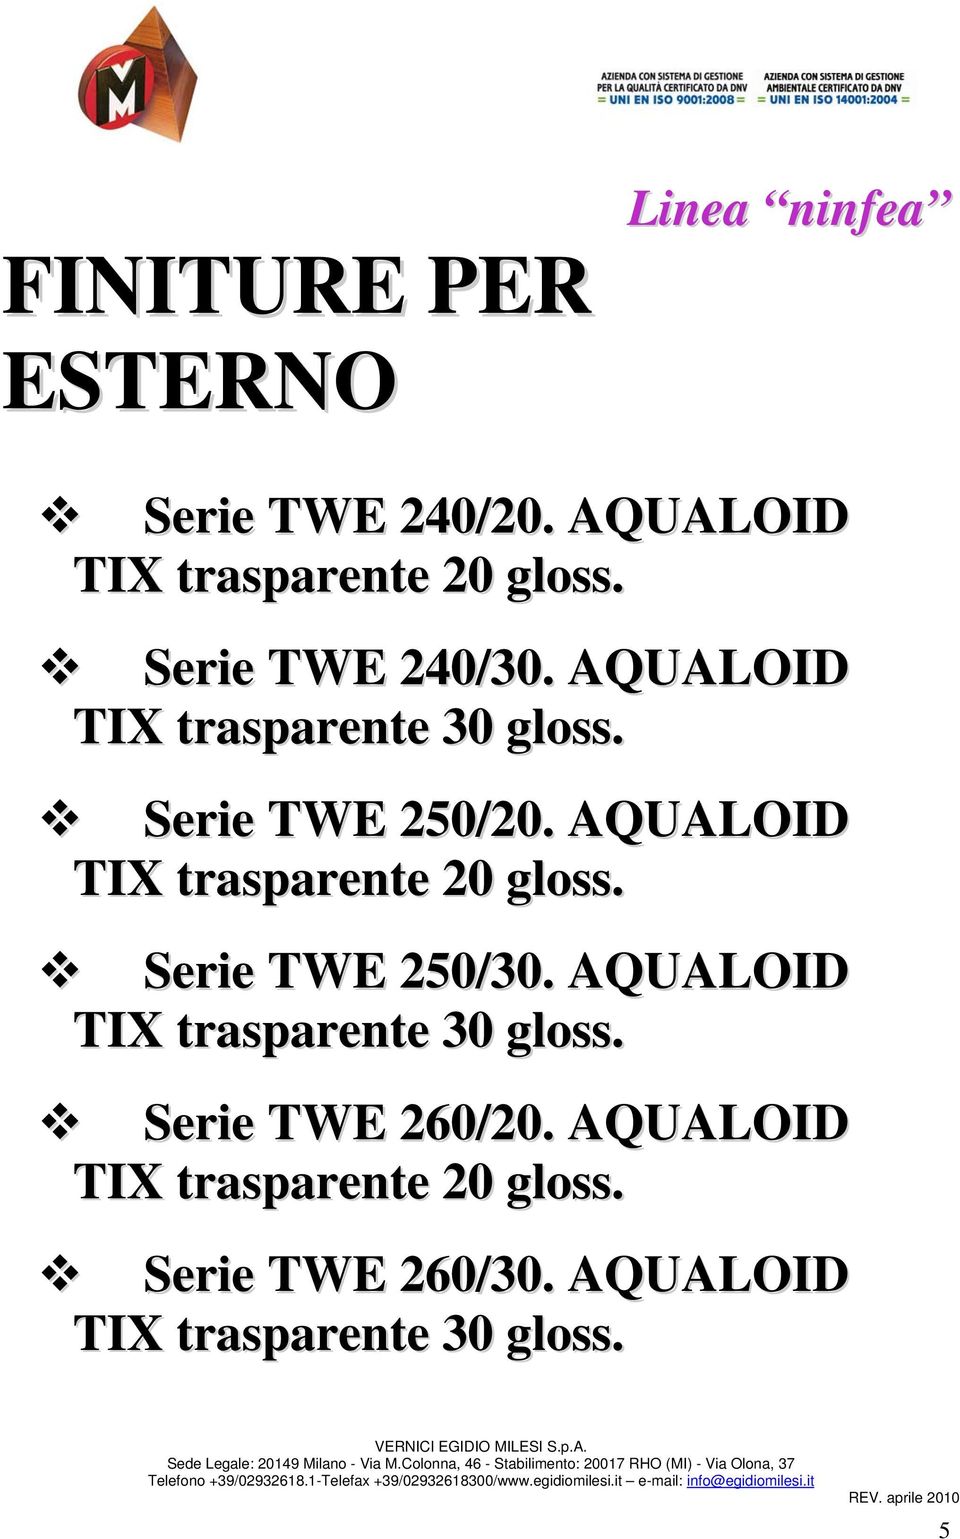 AQUALOID TIX trasparente 30 gloss. Serie TWE 260/20. AQUALOID TIX trasparente 20 gloss. Serie TWE 260/30.